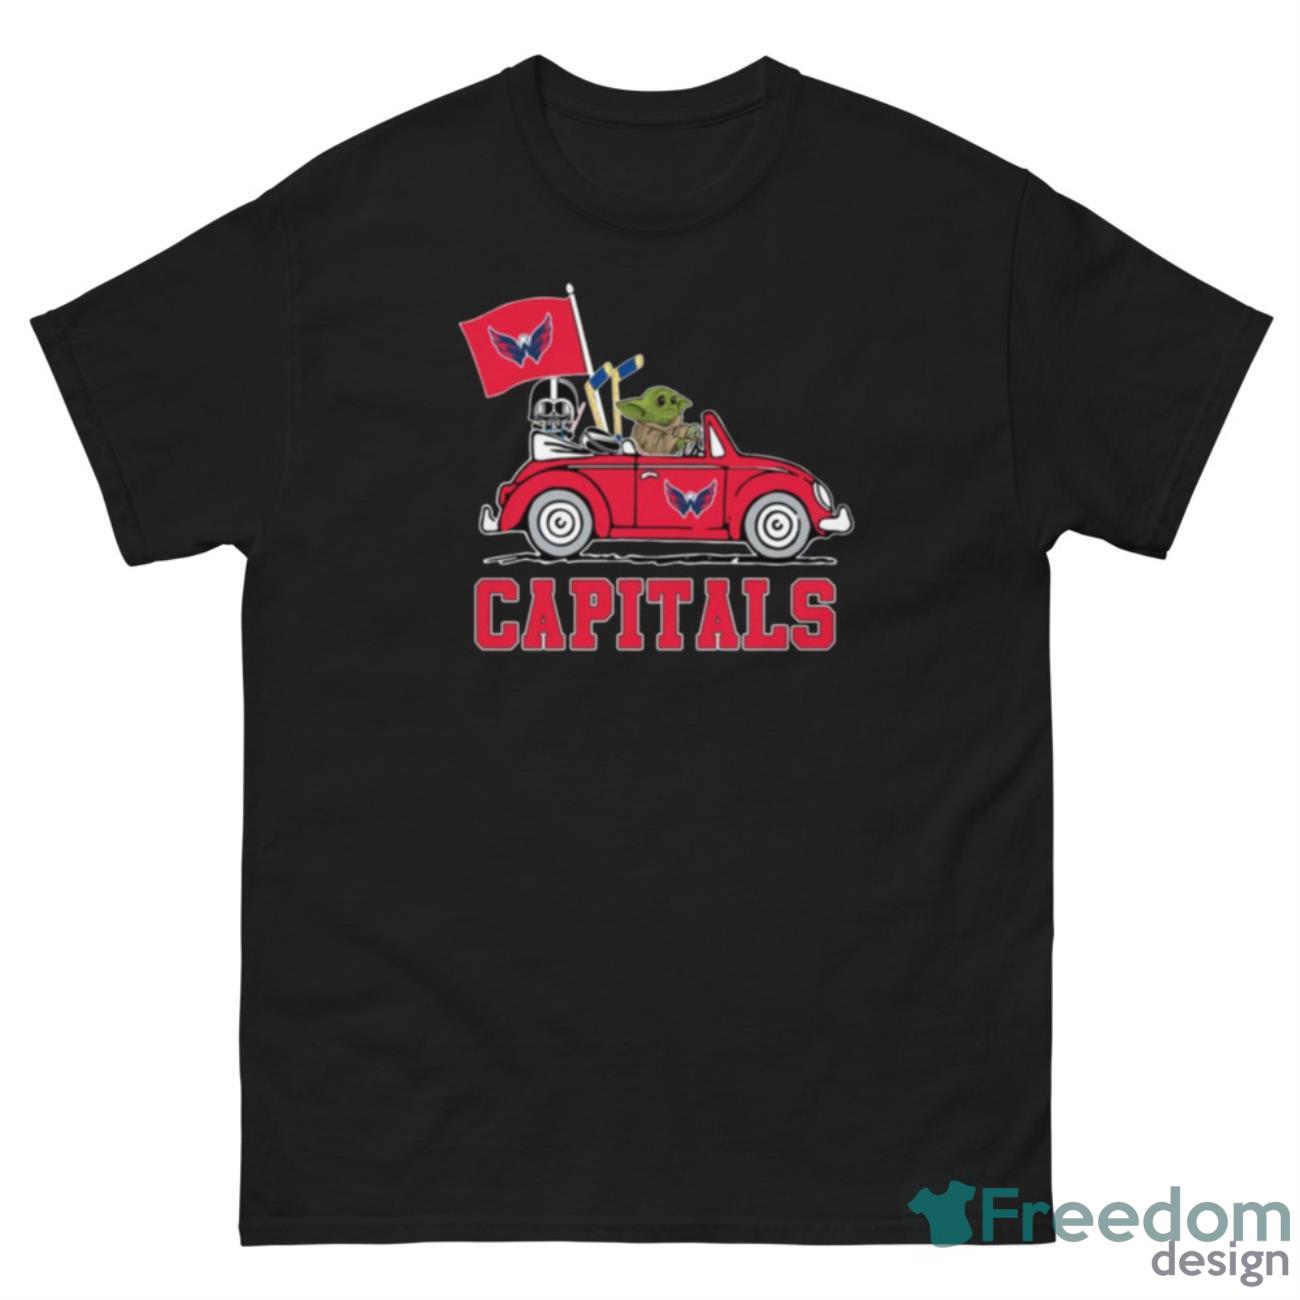 Washington Capitals Hockey Men's L Red T-shirt